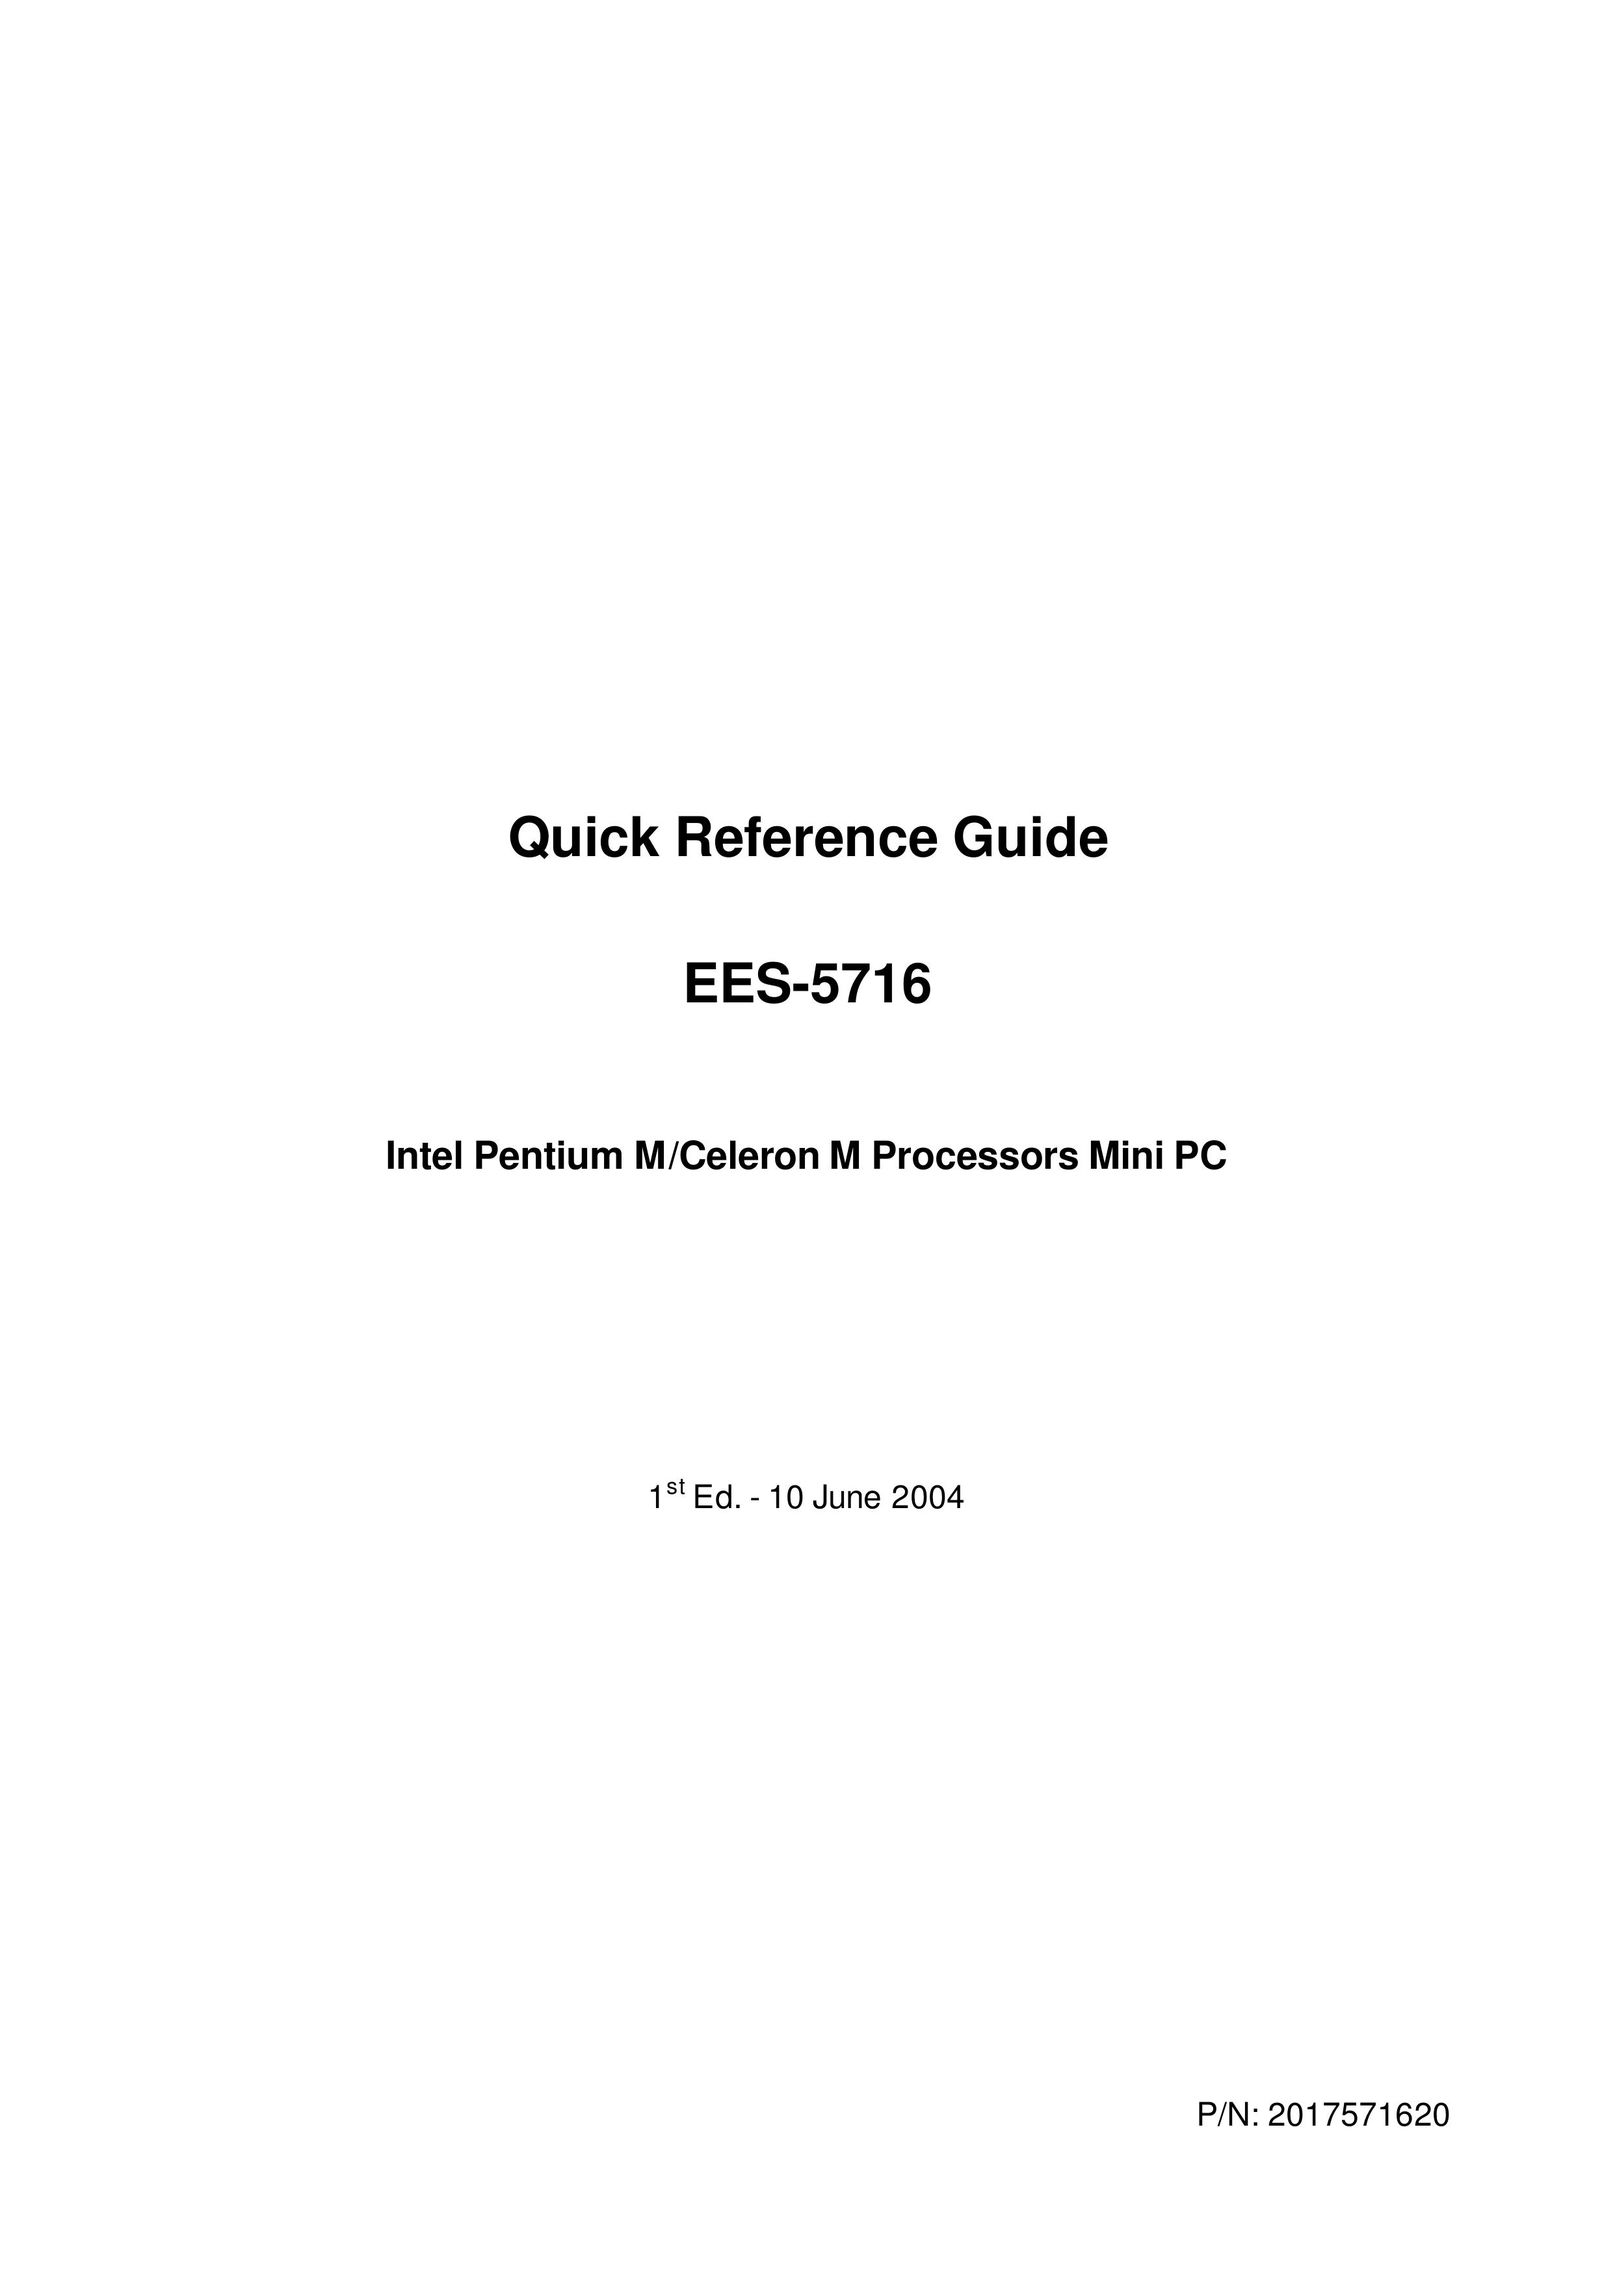 Intel Intel Pentium M/Celeron M Processors Mini PC Personal Computer User Manual